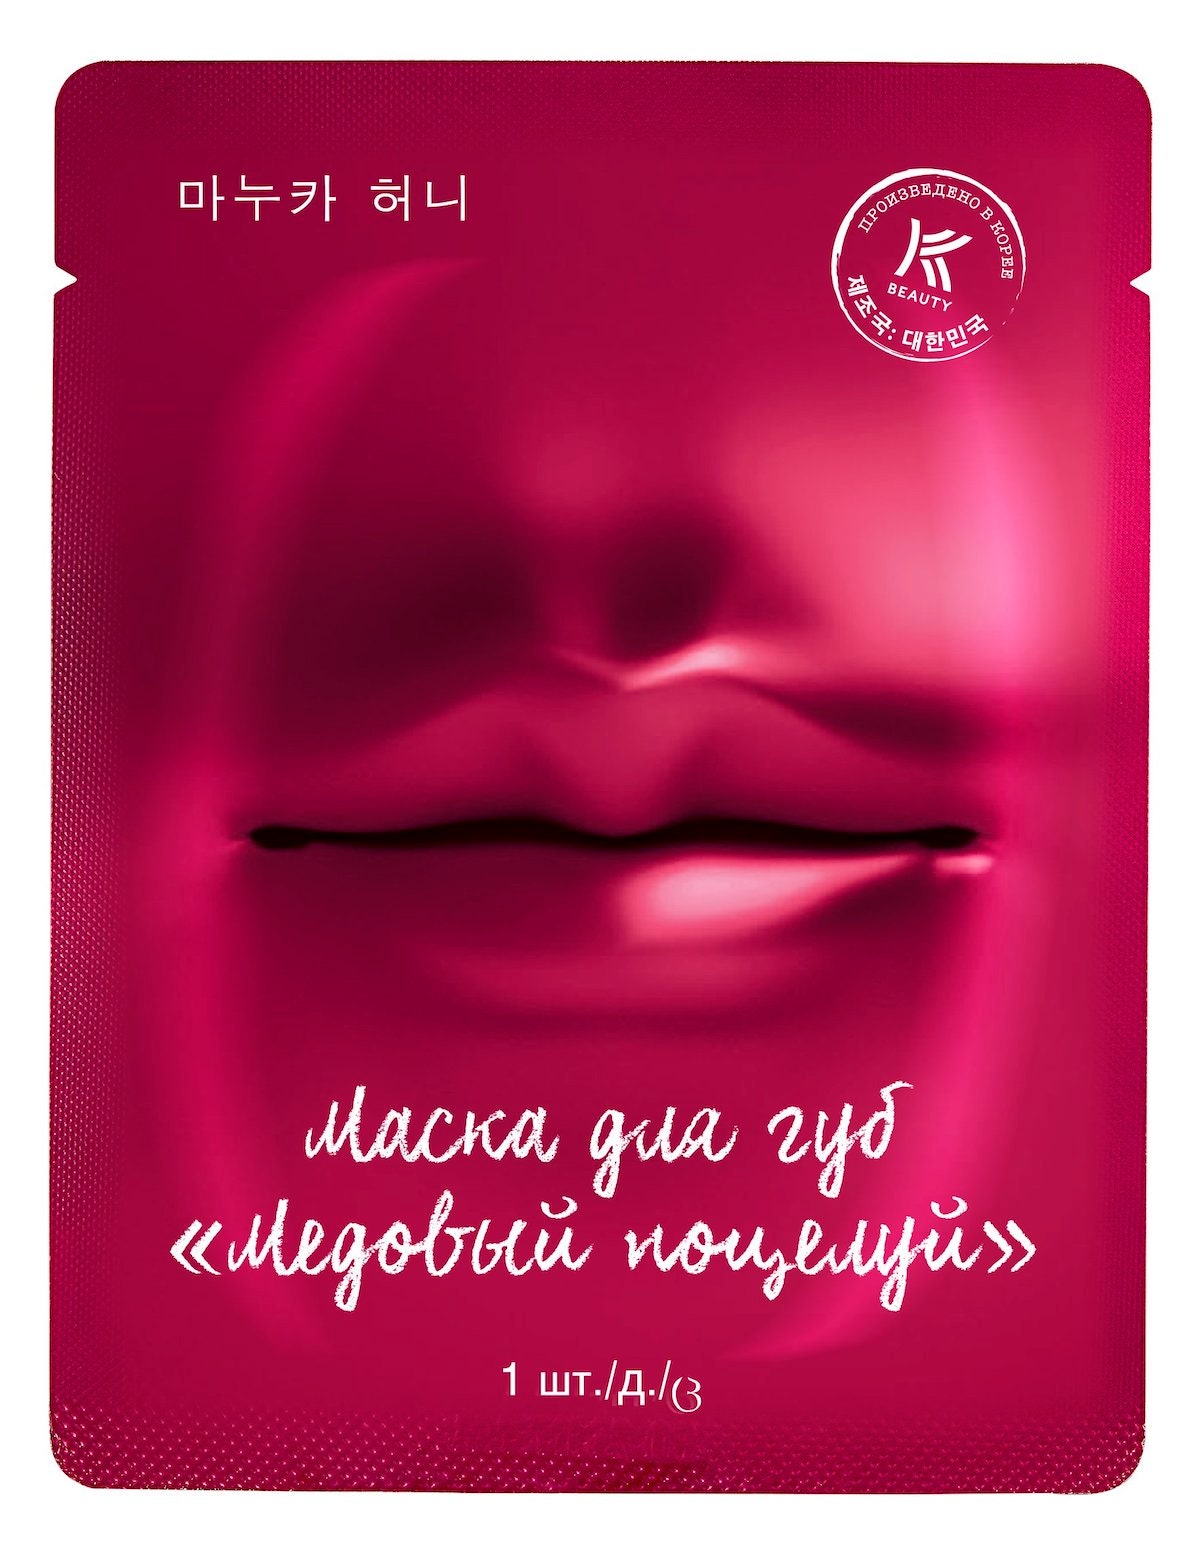 Корейская косметика KBeauty by Avon фото и видео с обзором